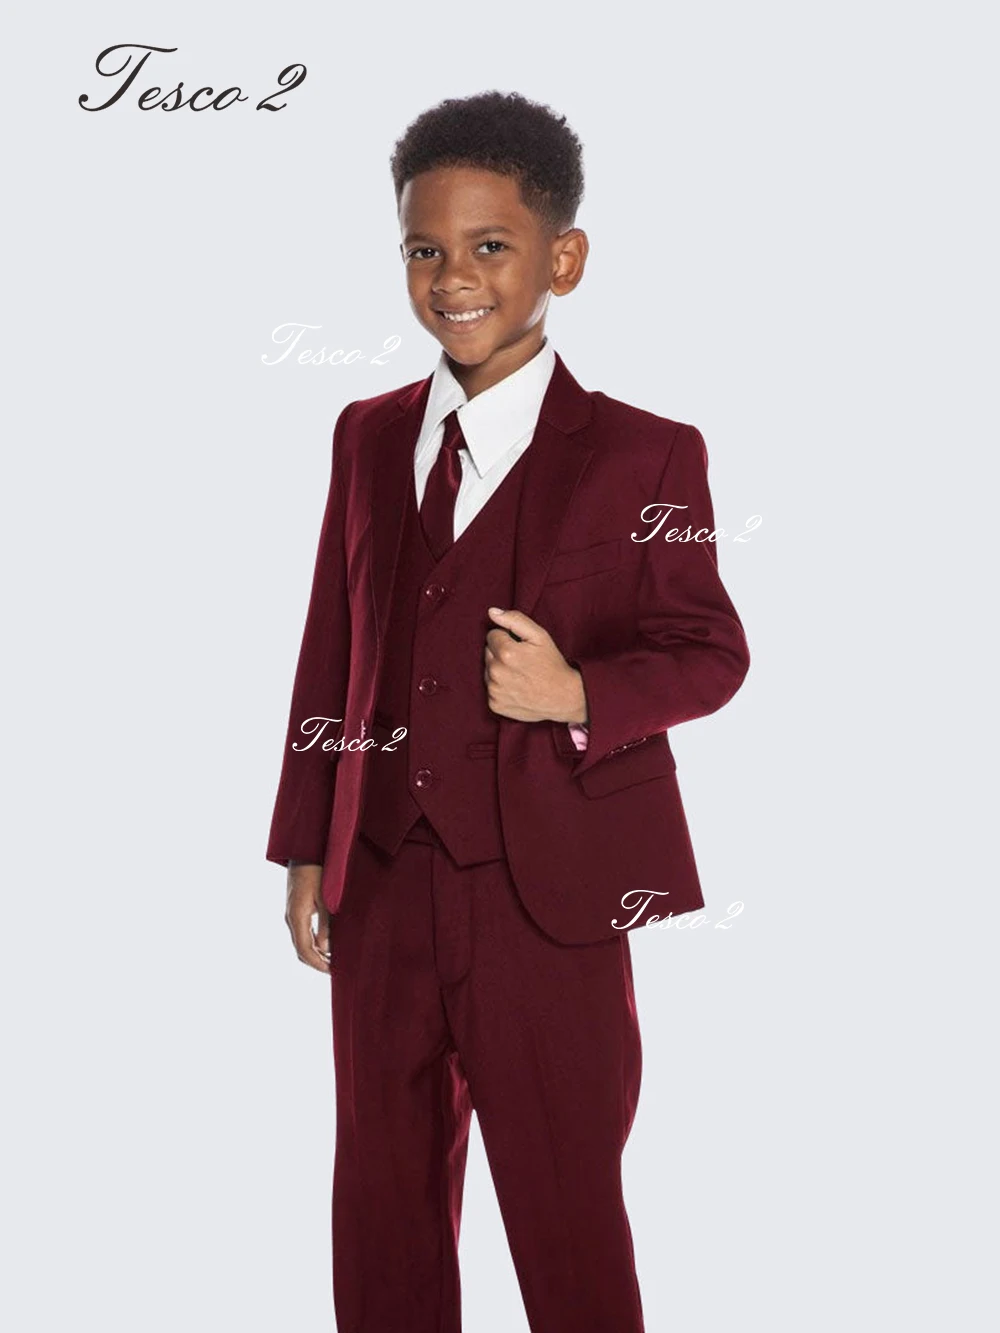 Red Formal Suit For Boy Elegant Gentleman Boys' Suit For 3 Pieces (Jacket+Vest+Pants) For Wedding Party Suit For Spring Autumn